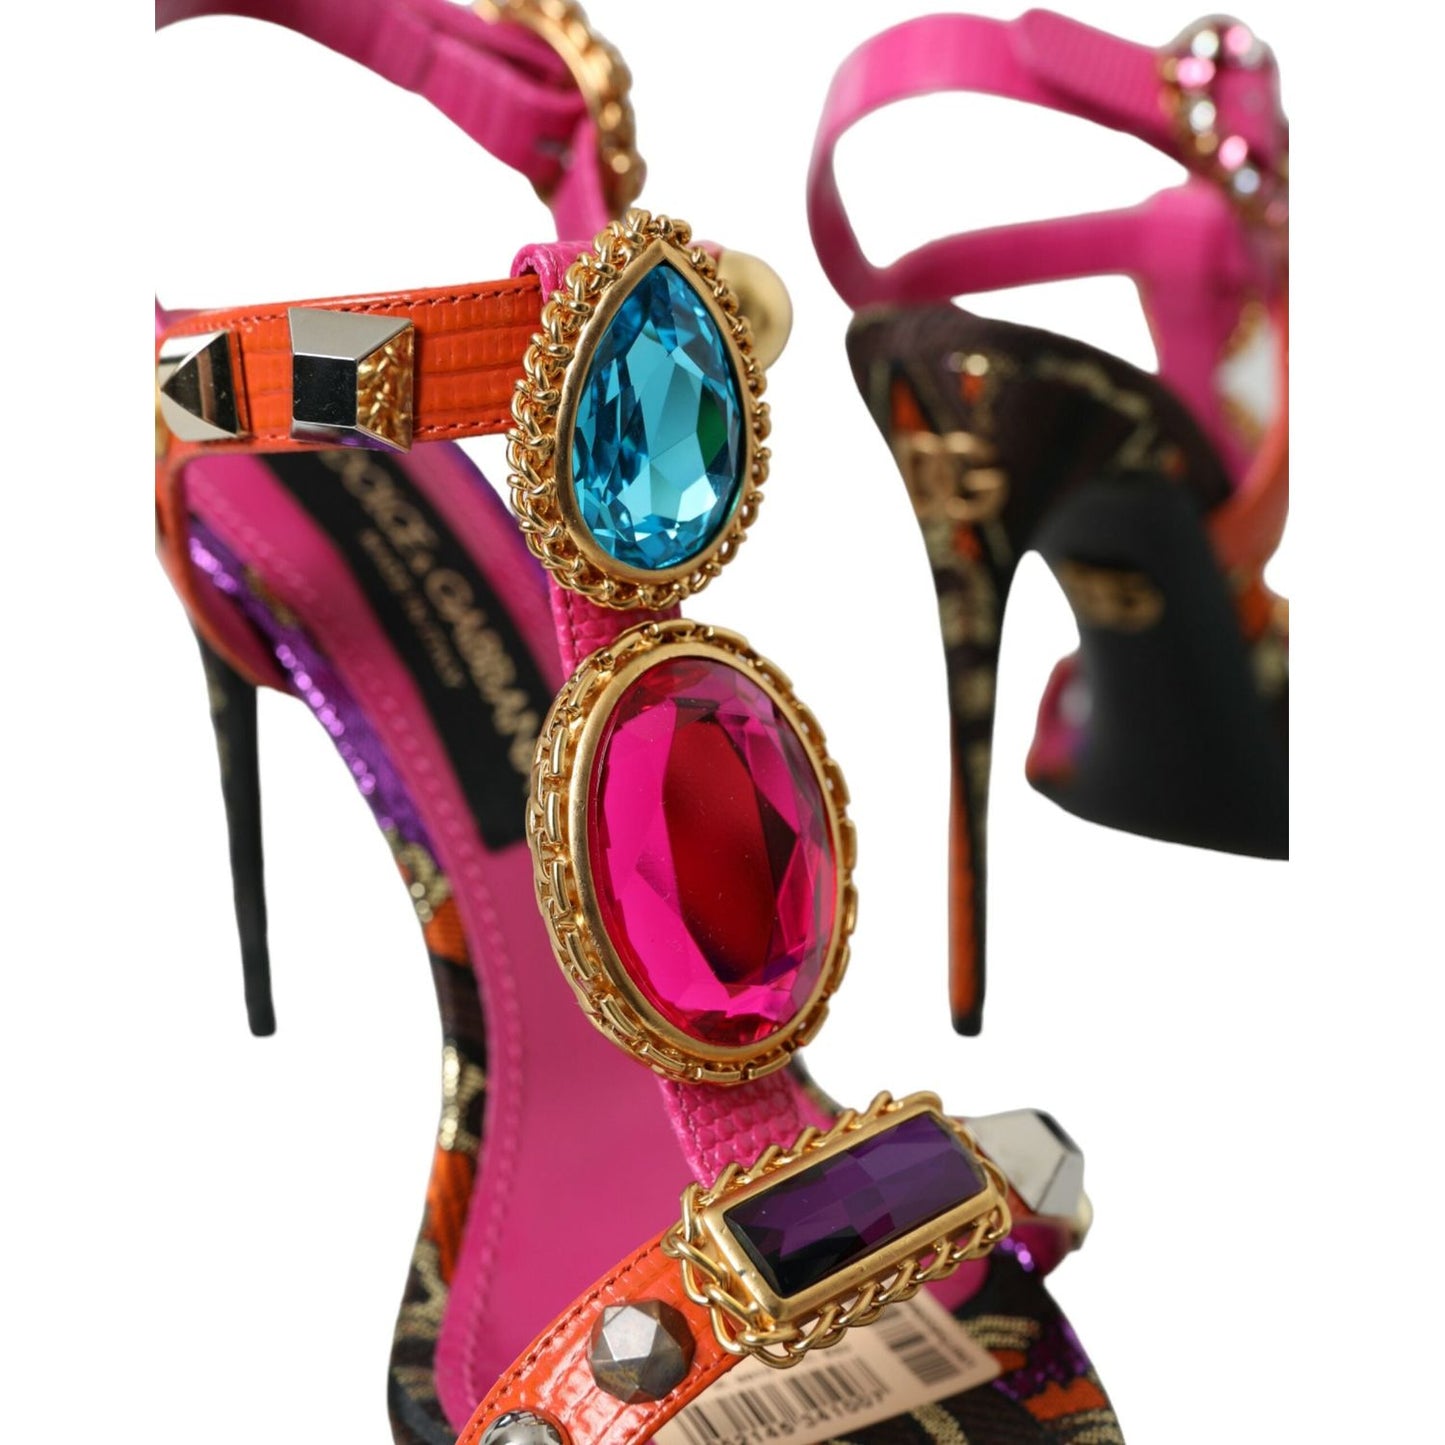 Dolce & Gabbana Pink Jacquard Crystals Sandals Heels Shoes pink-jacquard-crystals-sandals-heels-shoes